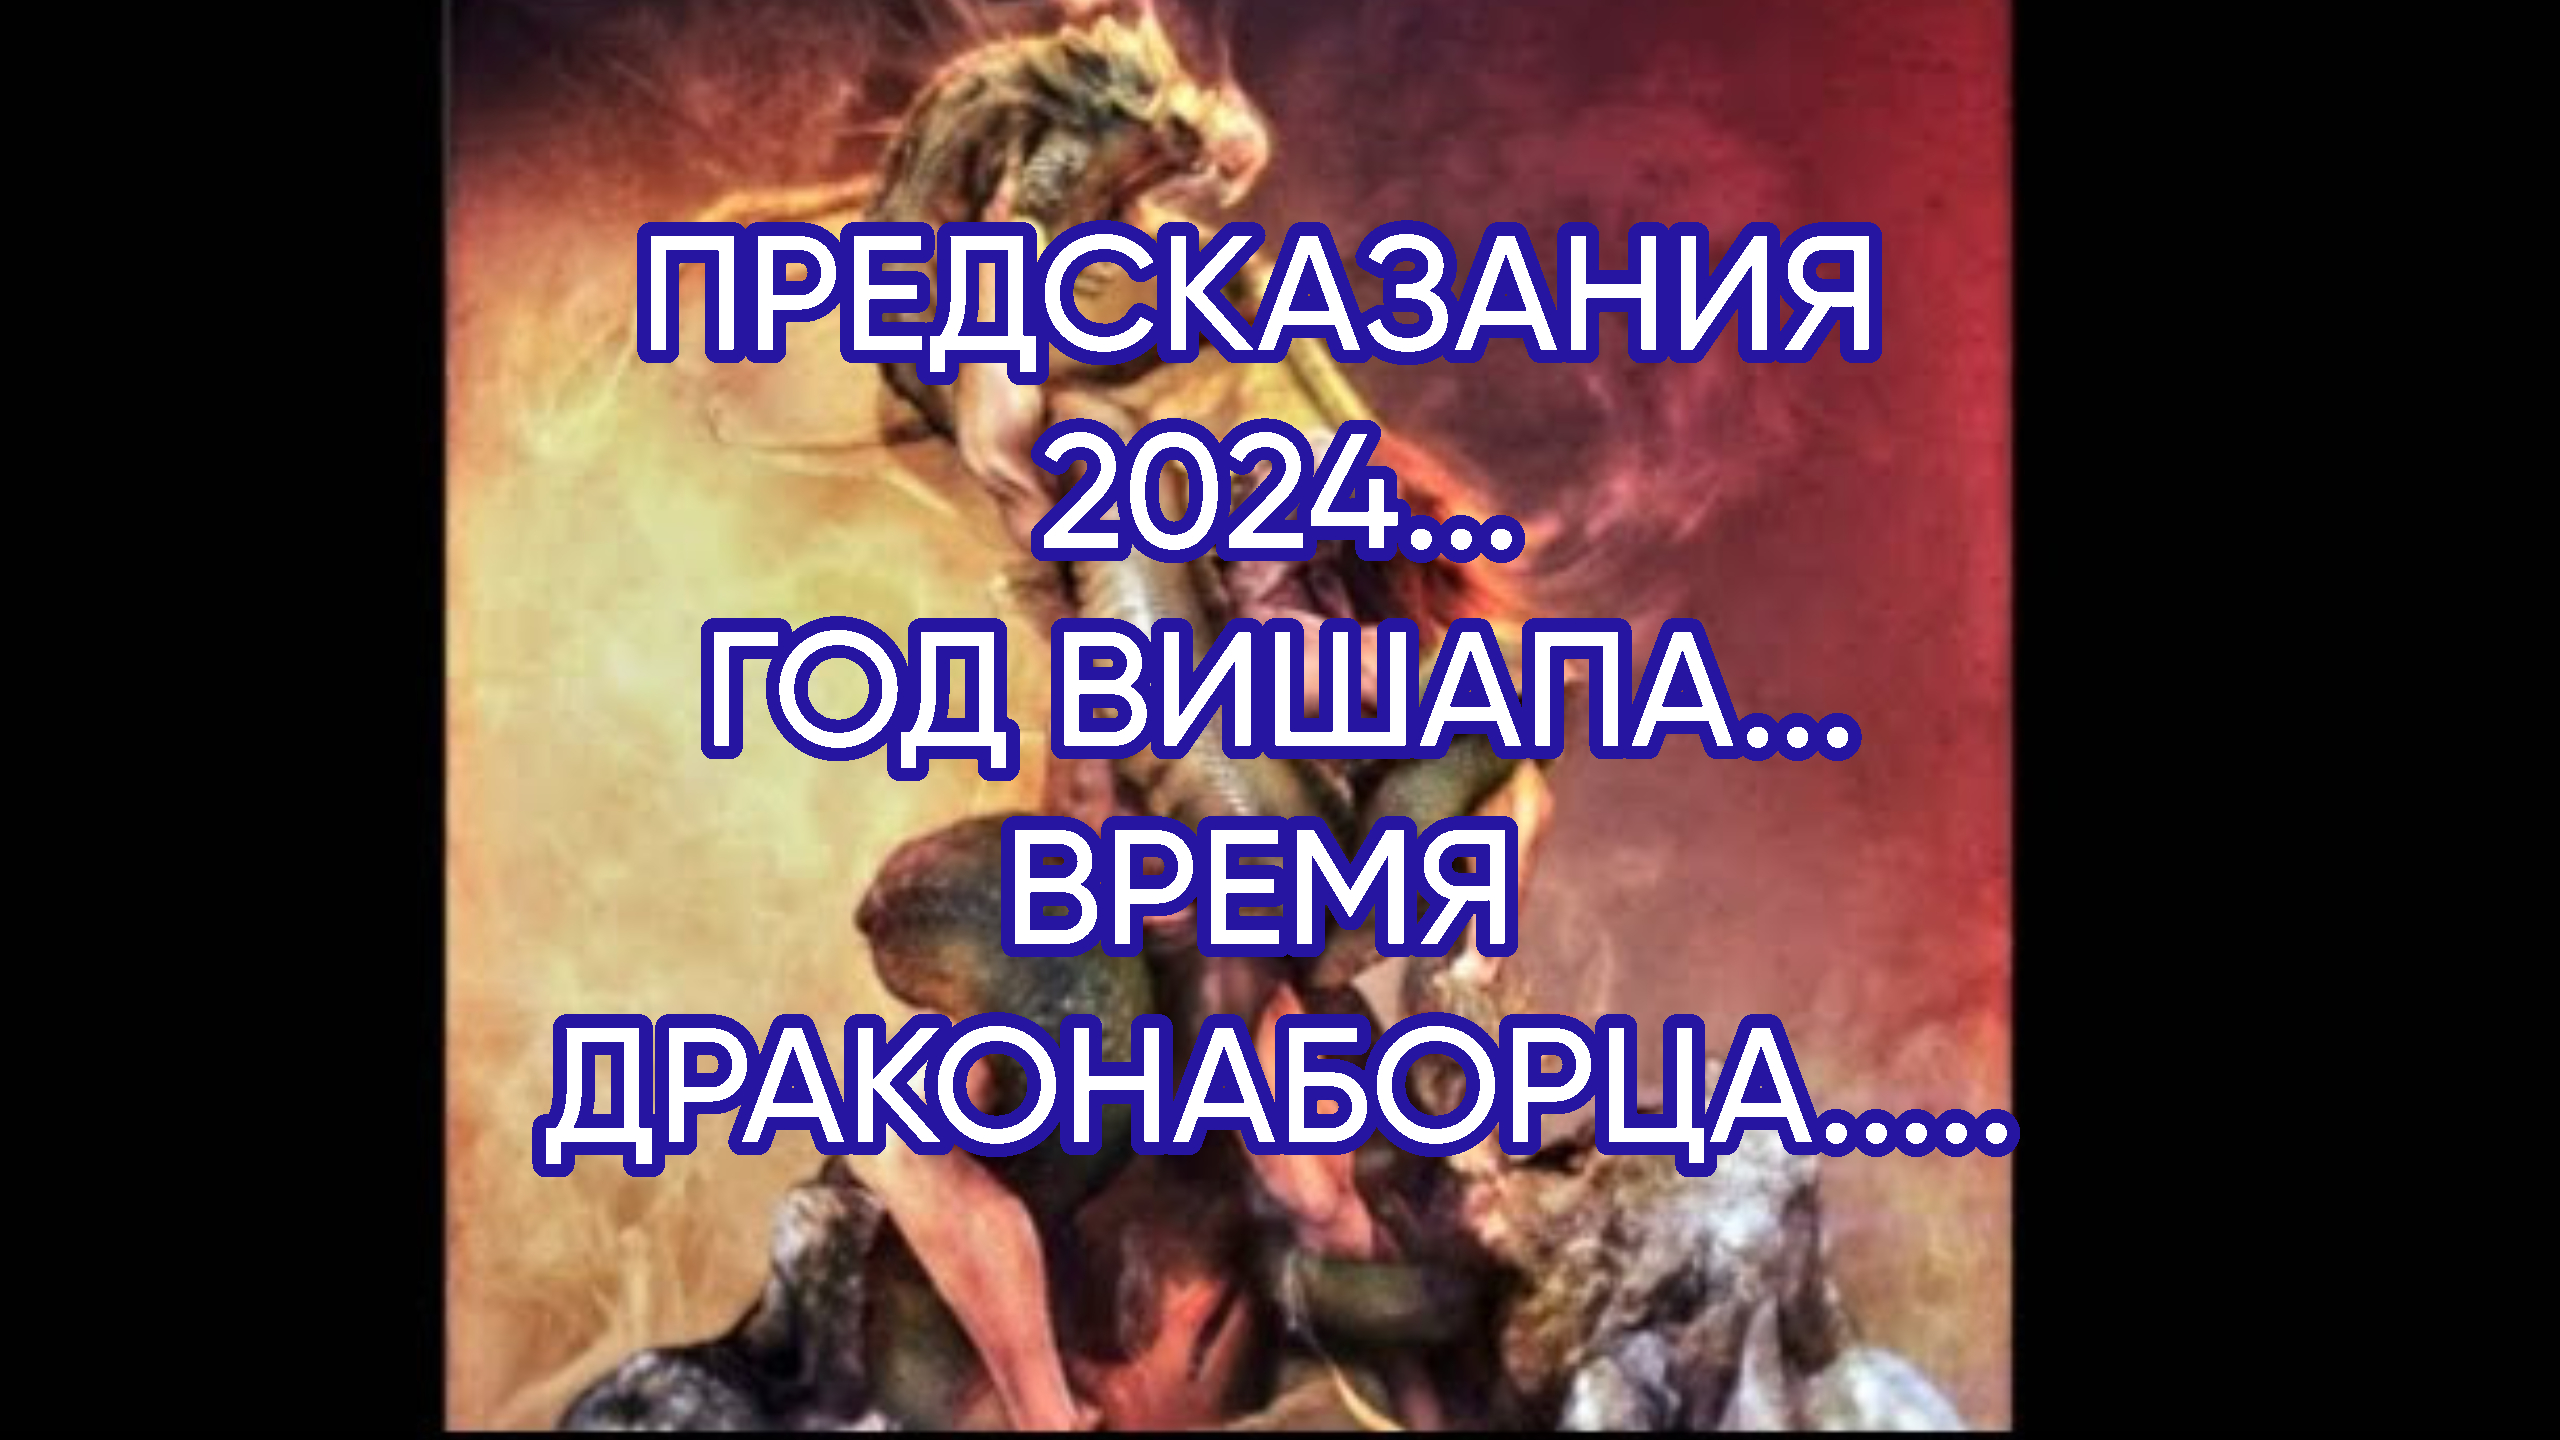 Обренович предсказания на 2024. Предсказания на 2024. Пророчества на 2024 год. Предсказания на 2024 год журнала.